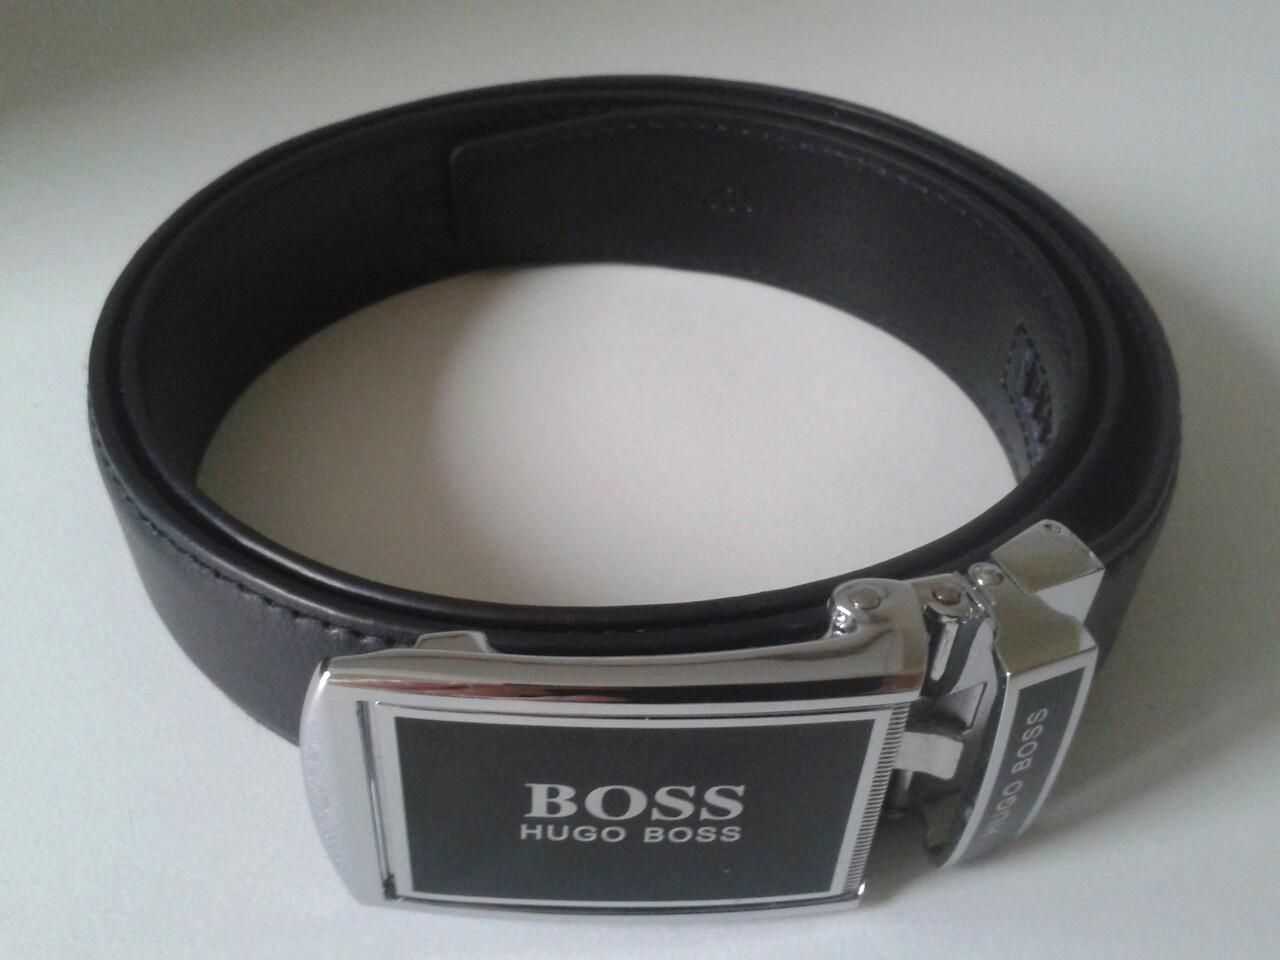 boss belt